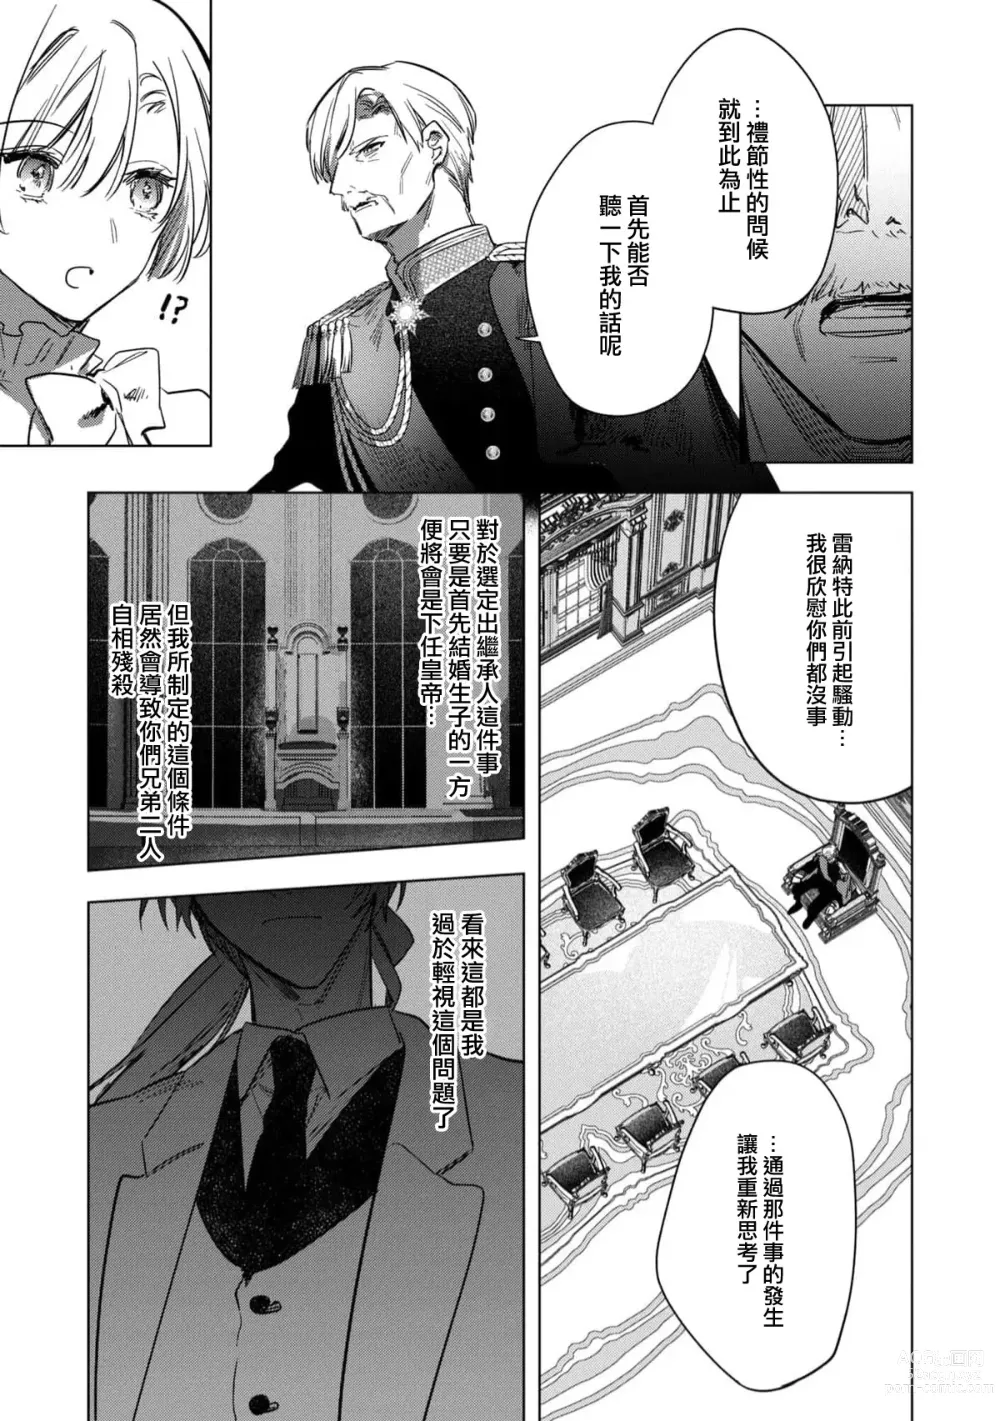 Page 167 of manga 以愛將我融化~即日求婚！？但是能一直都溺愛我嗎？皇子殿下 1-7 end